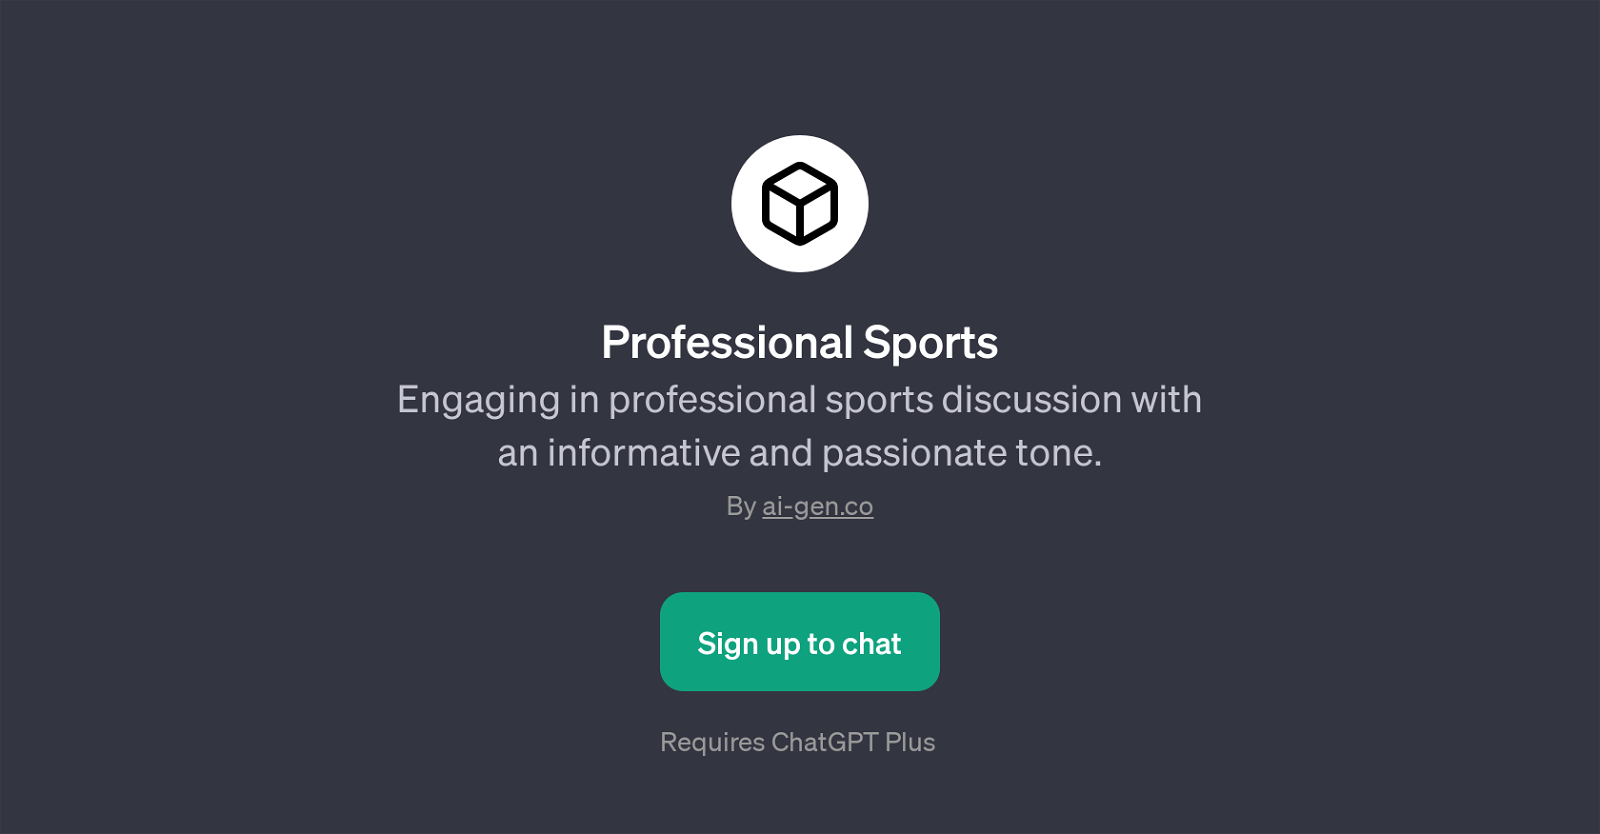 Professional Sports website